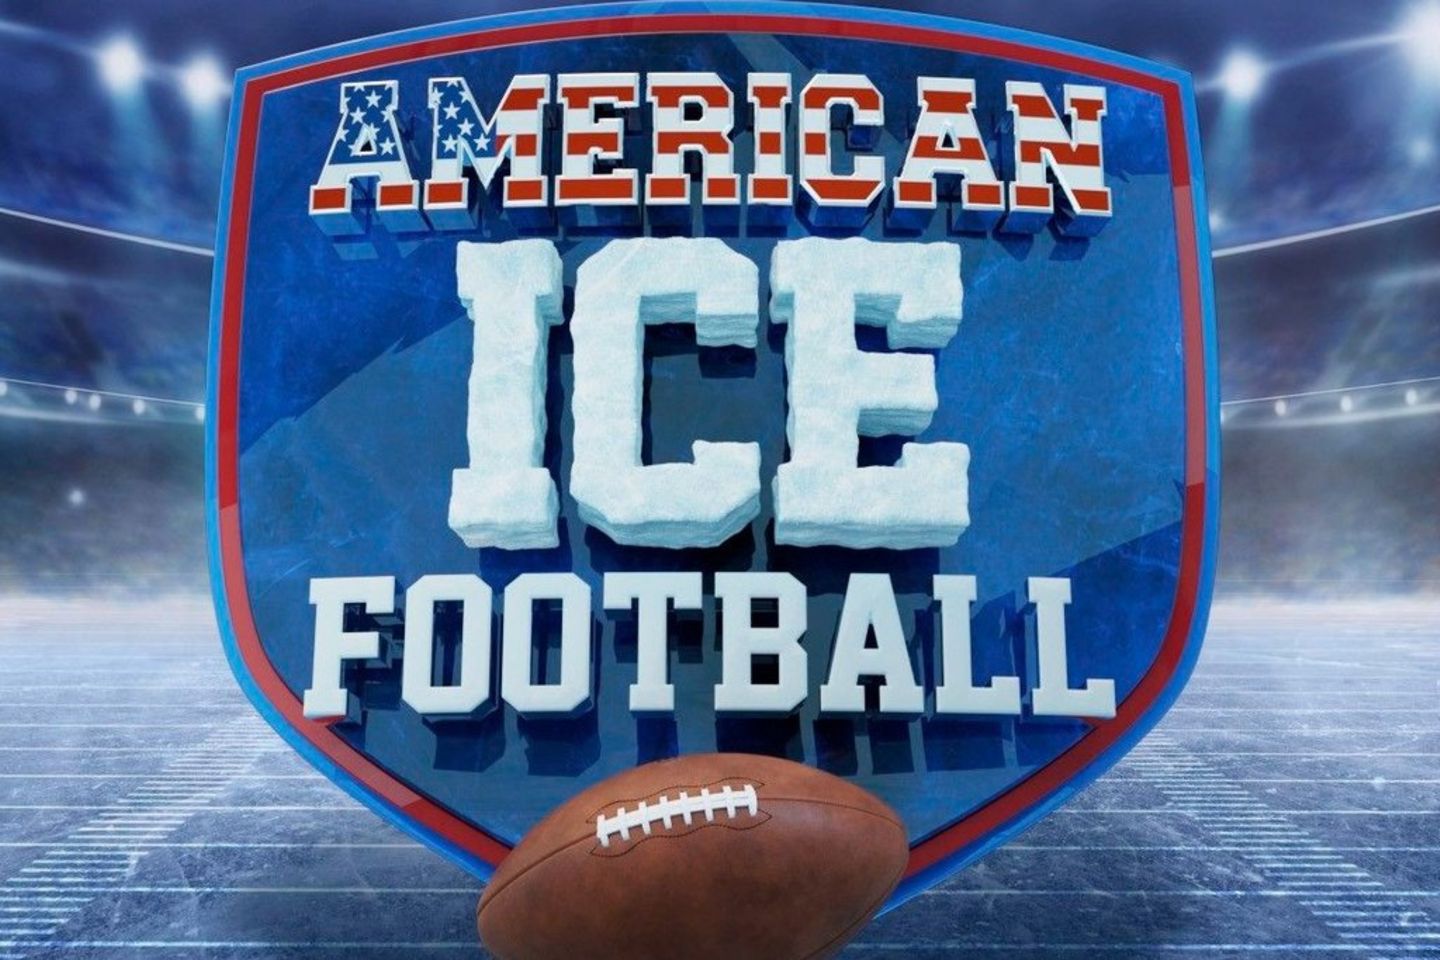 American Ice Football/